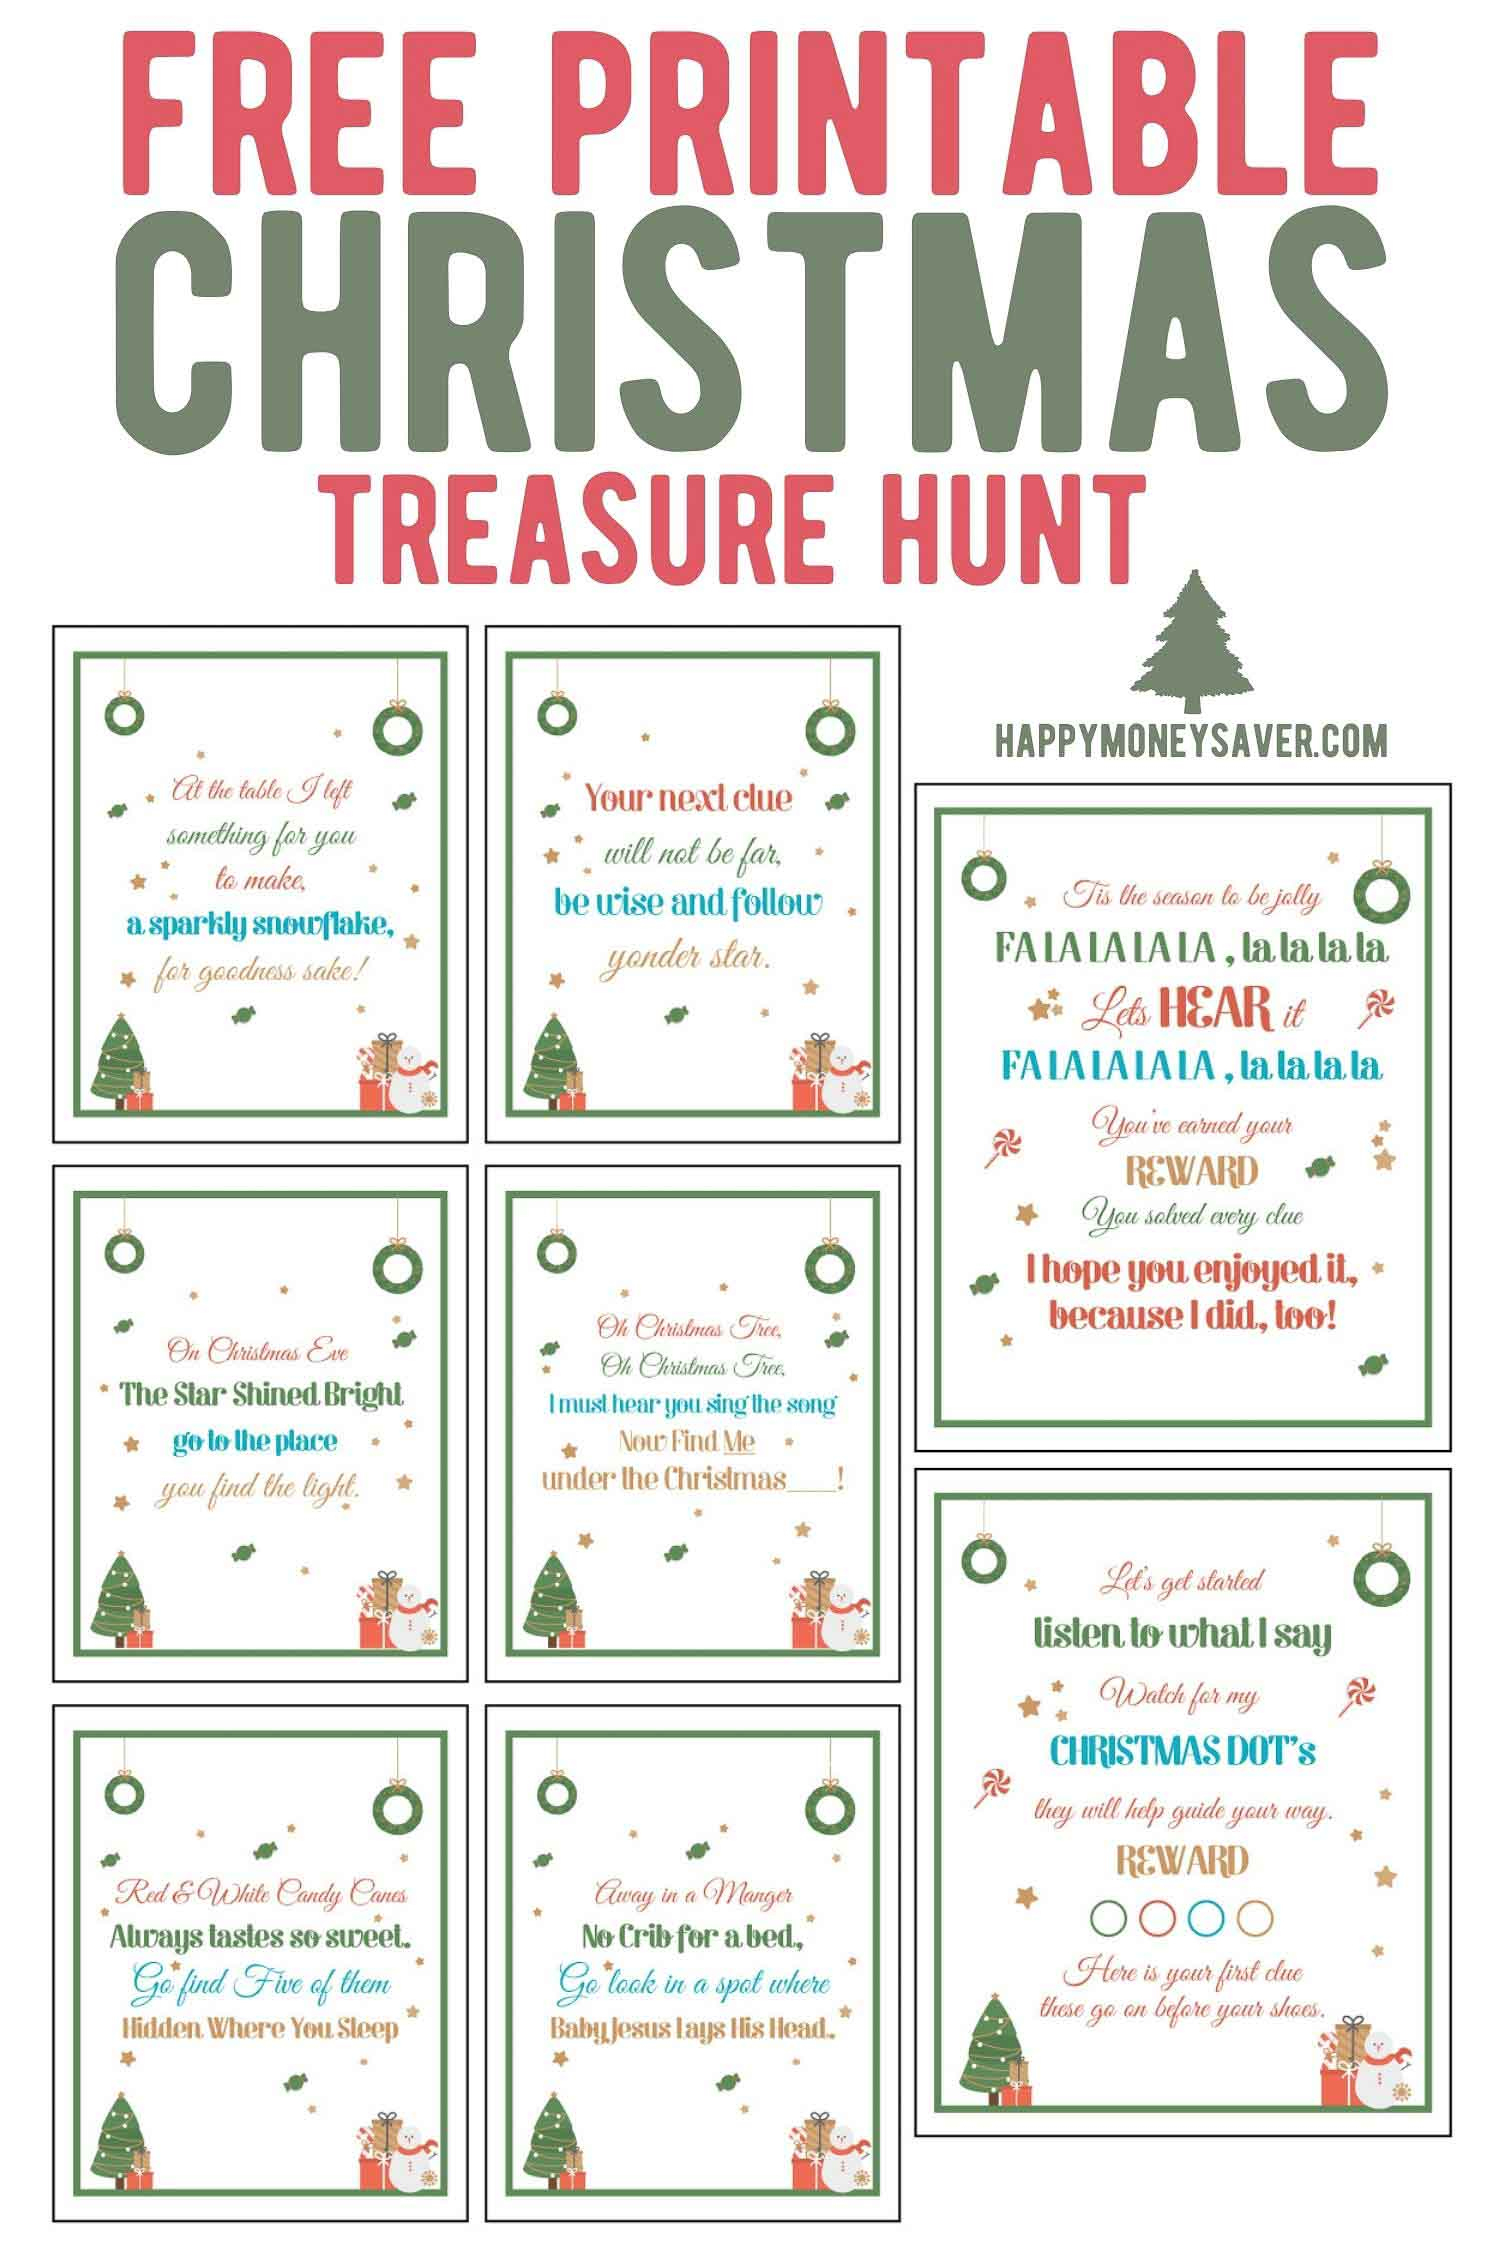 The Ultimate Christmas Treasure Hunt + Free Printable regarding Free Printable Christmas Treasure Hunt Clues